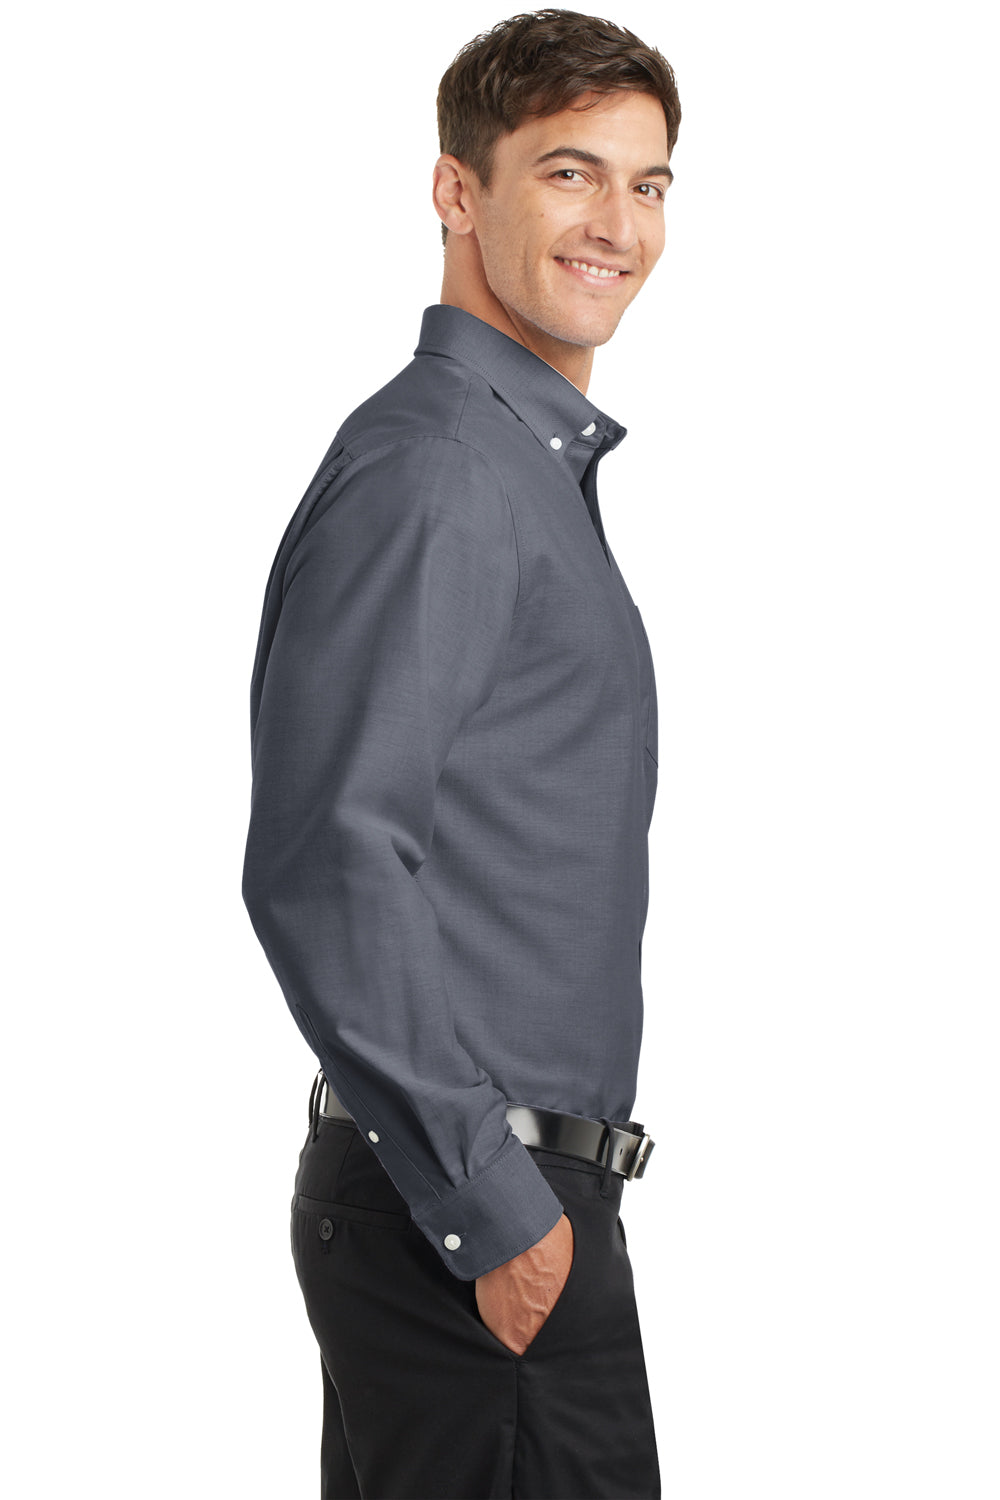 Port Authority S658 Mens SuperPro Oxford Wrinkle Resistant Long Sleeve Button Down Shirt w/ Pocket Black Side